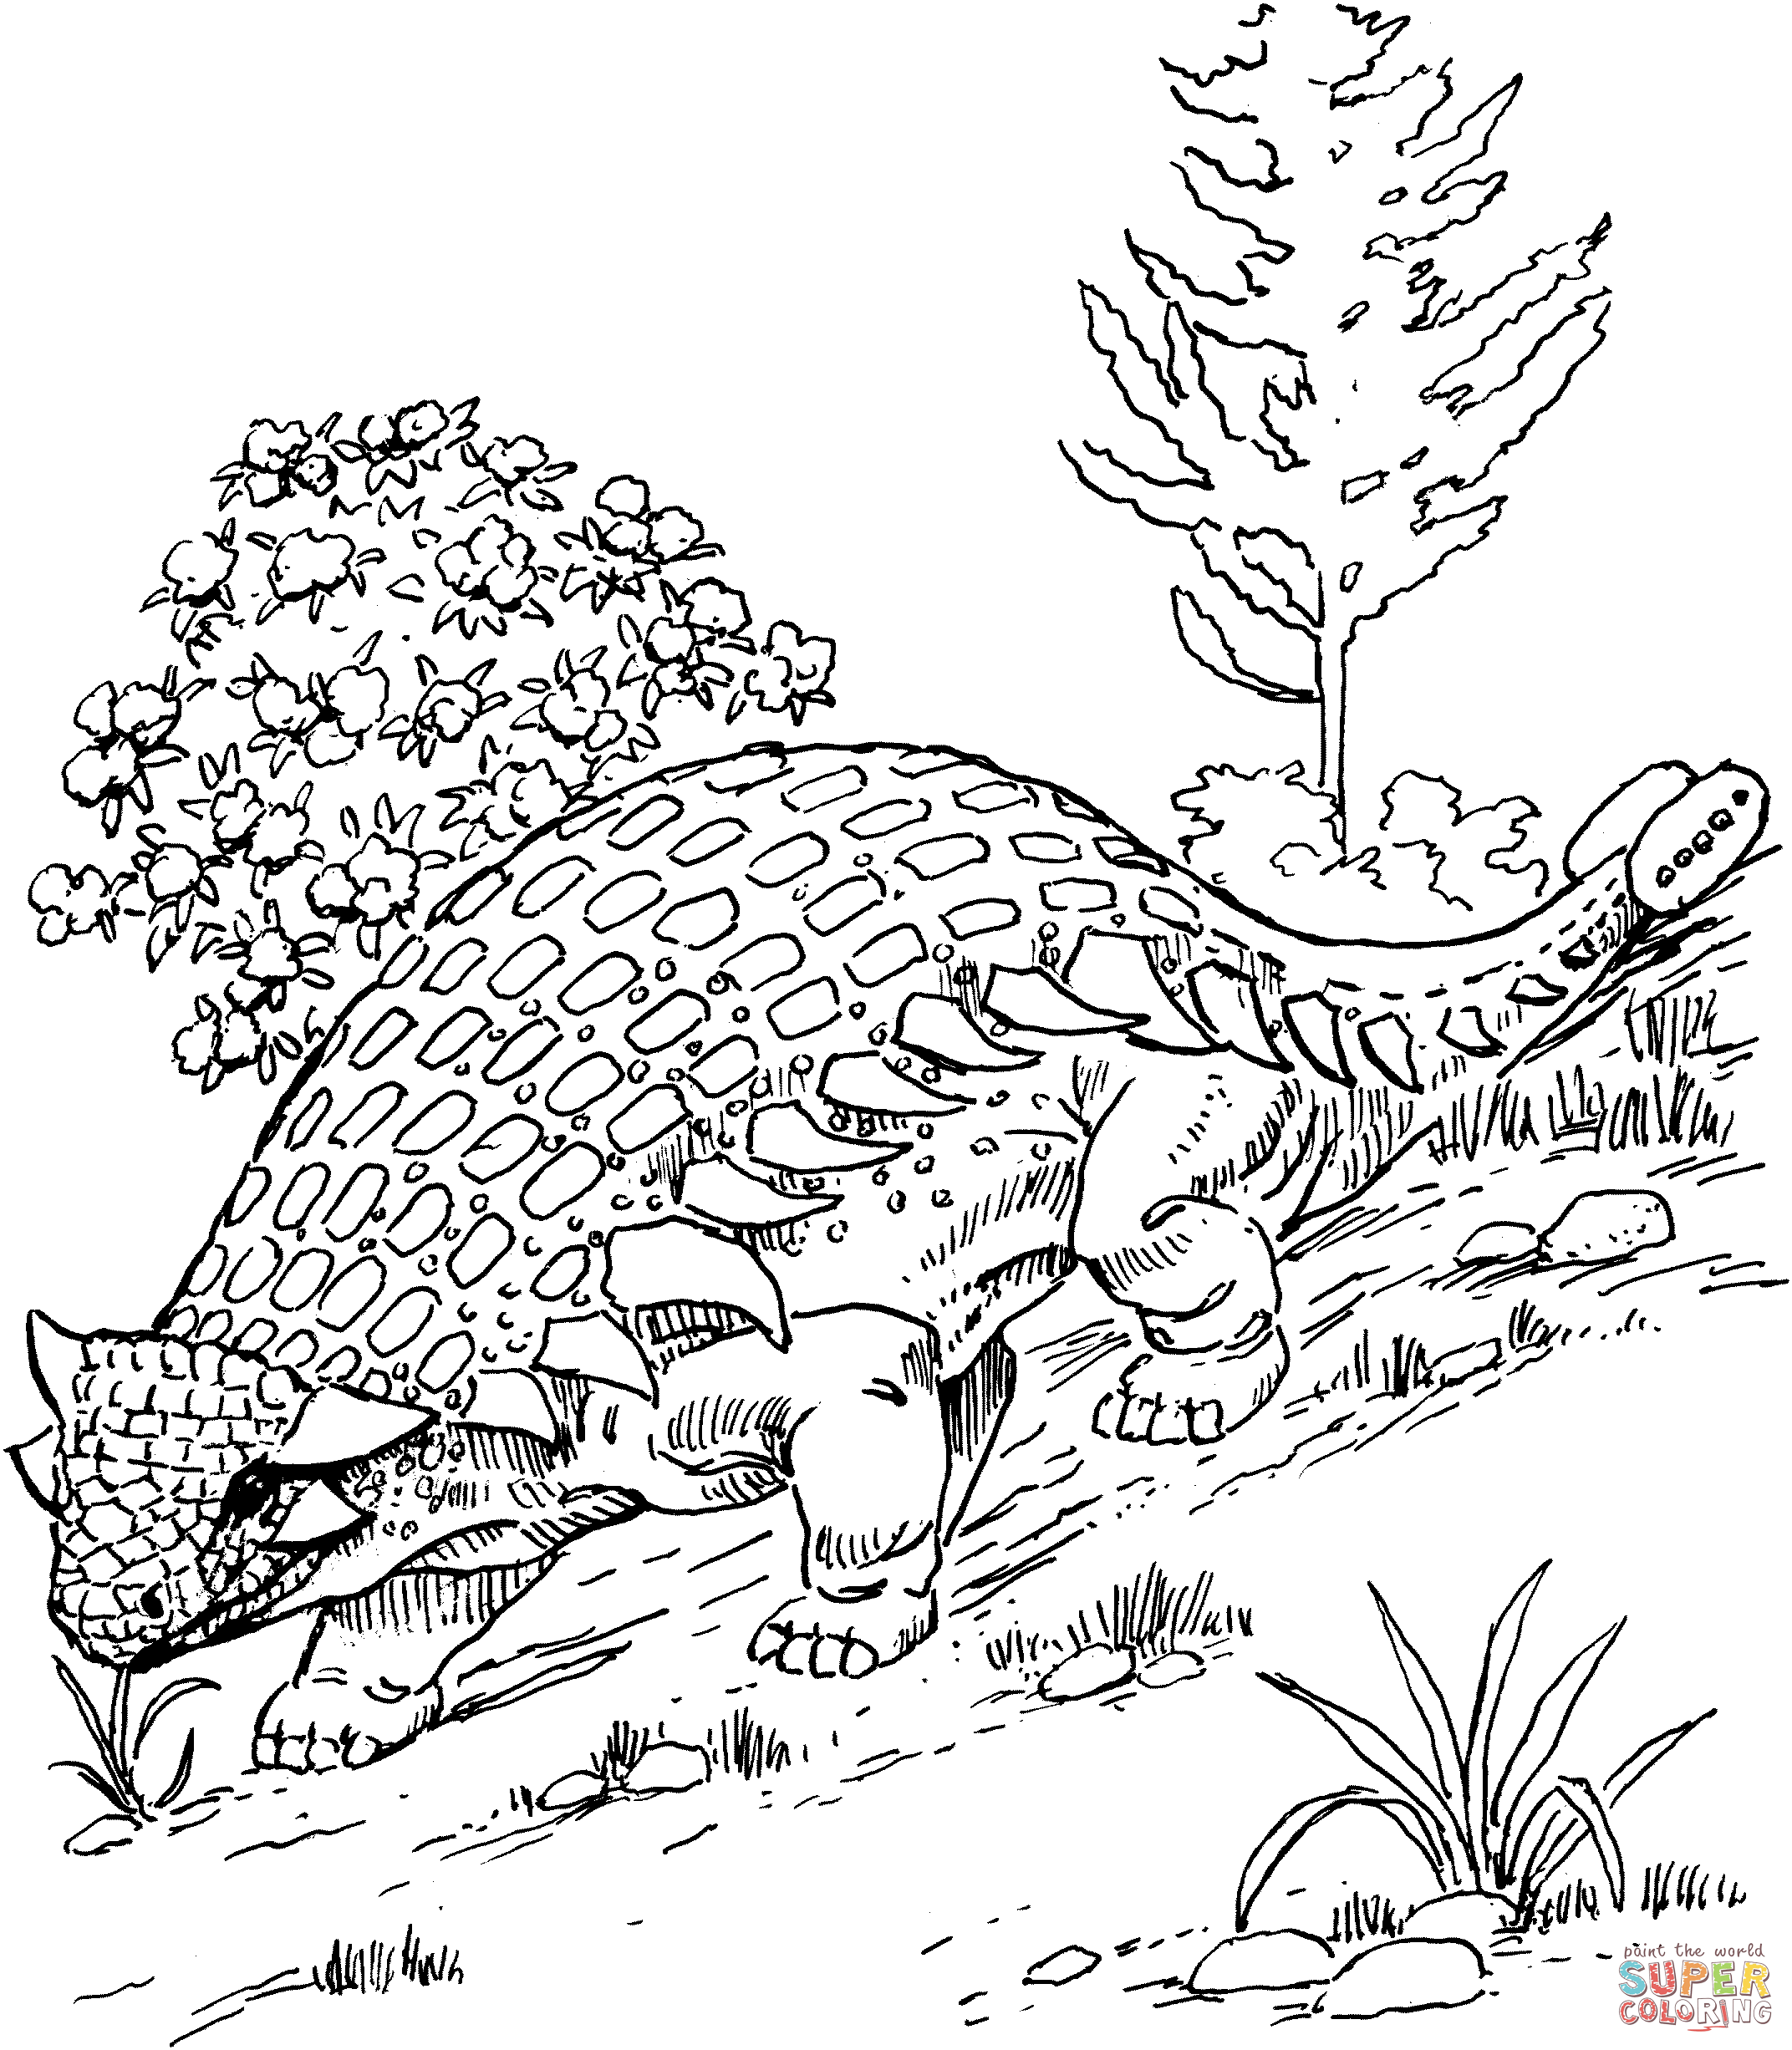 Ankylosaurus Coloring Page